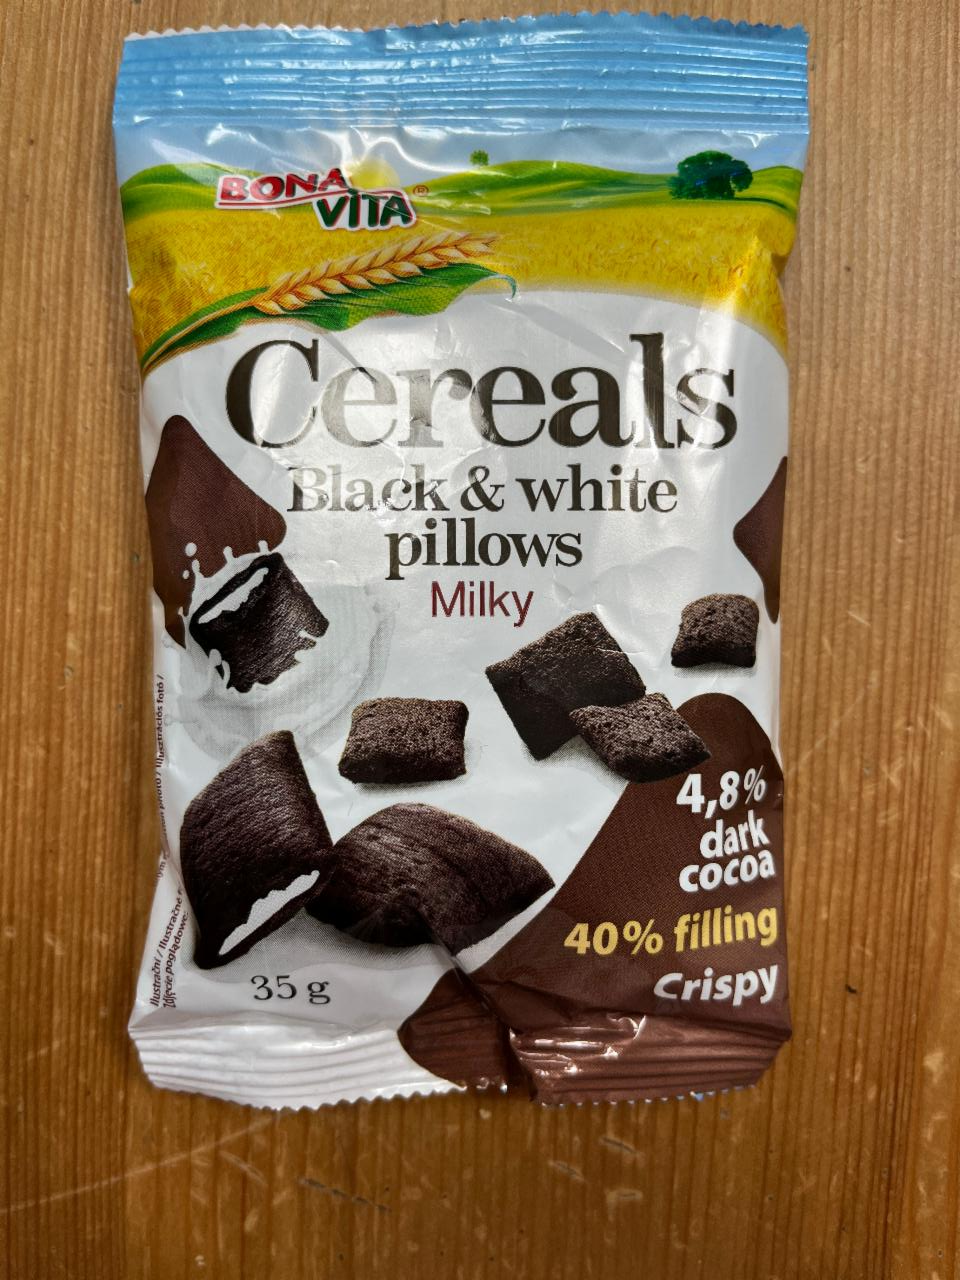 Fotografie - Cereals Black & White pillows Milky Bona Vita